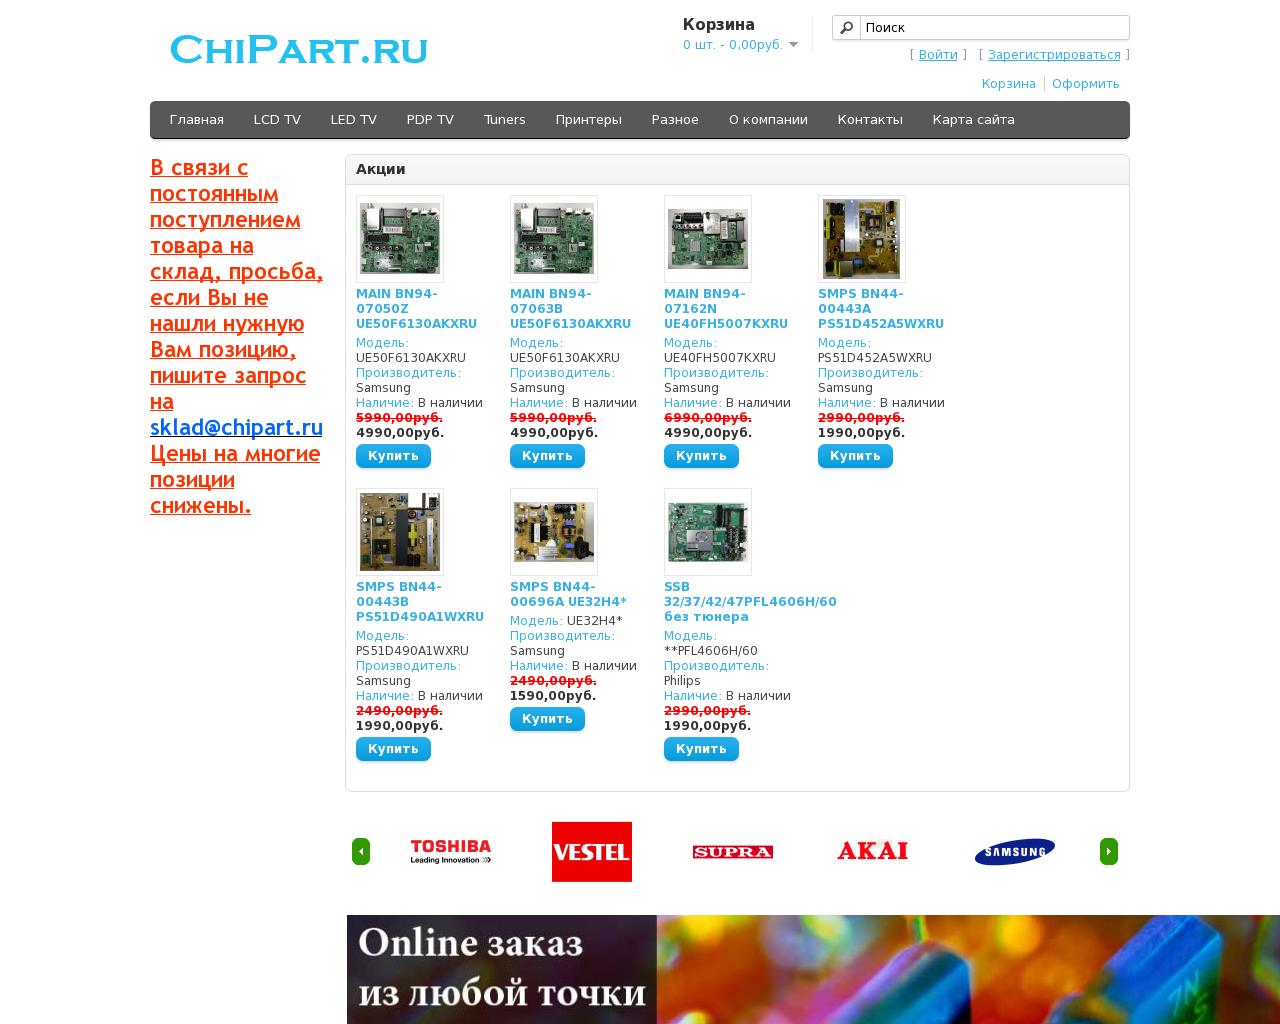 Изображение сайта chipart.ru в разрешении 1280x1024